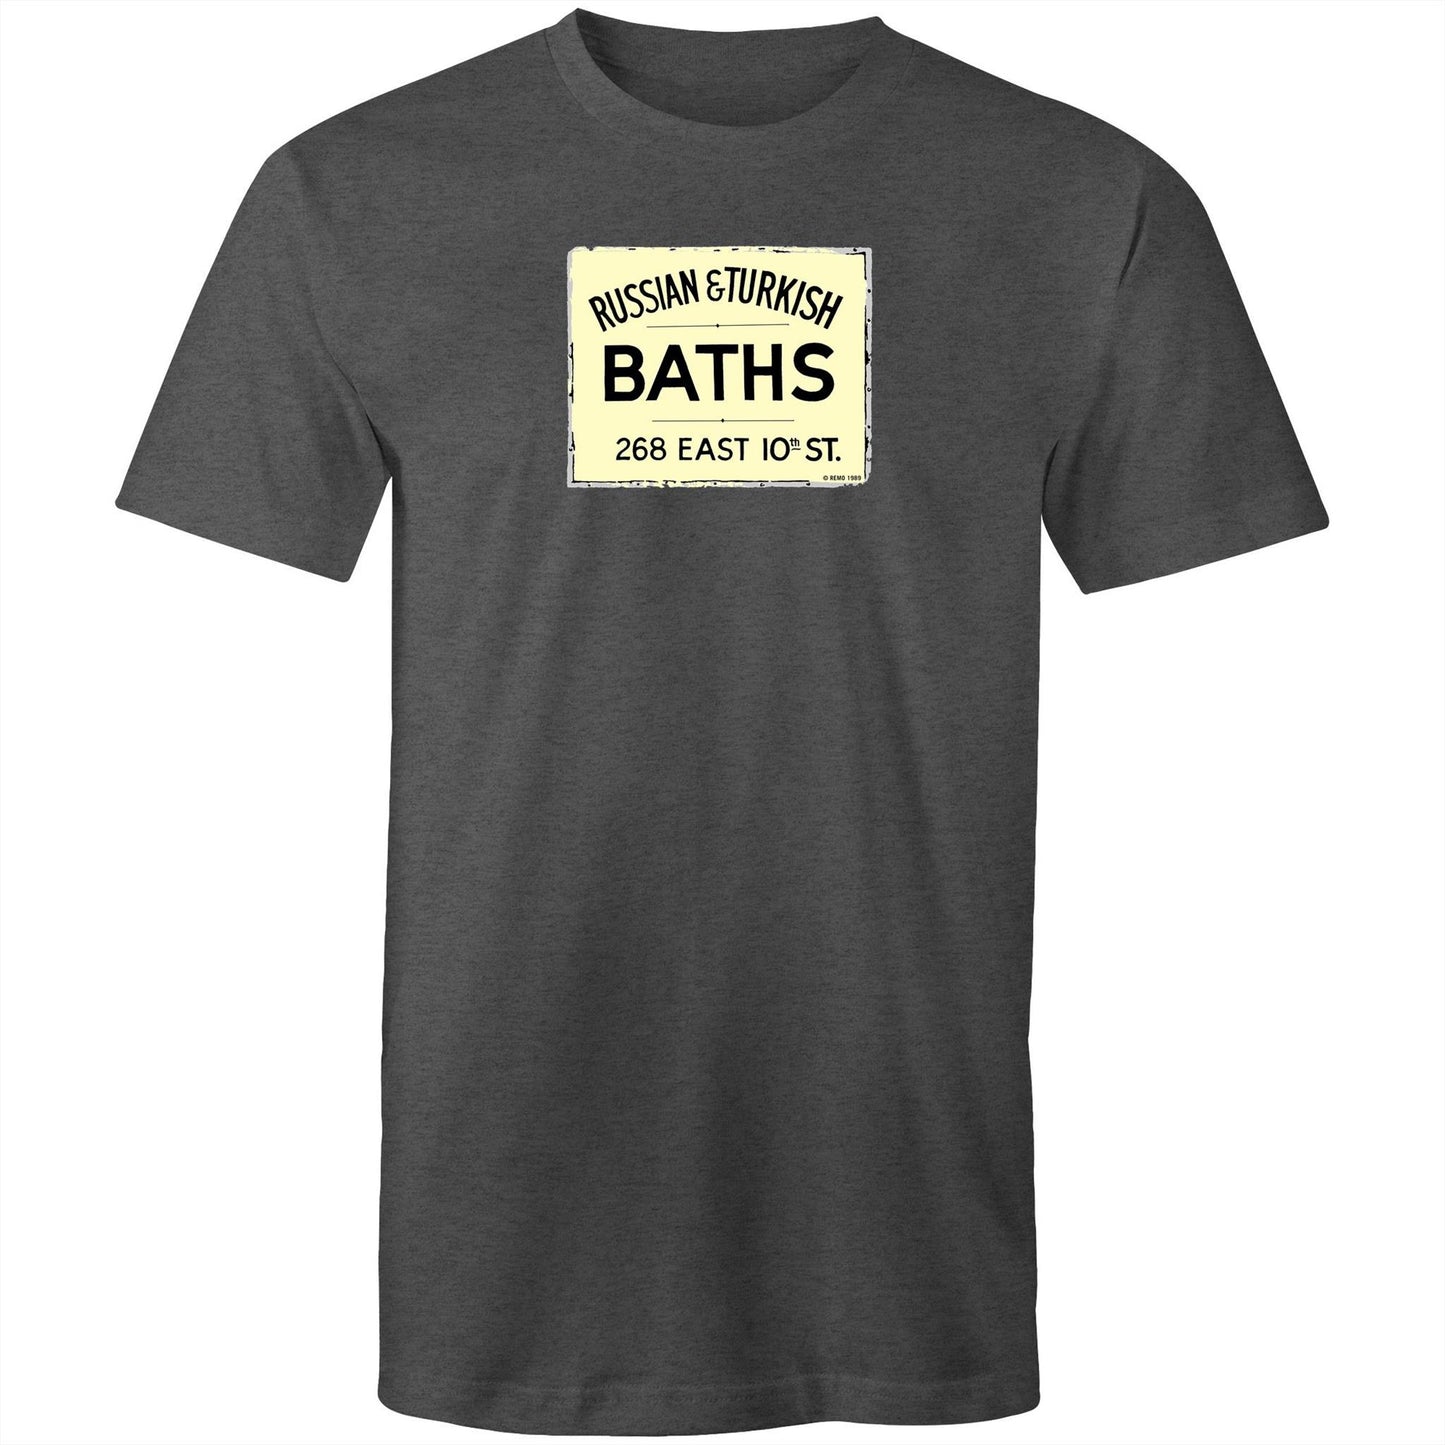 Russian & Turkish Baths T Shirts for Men (Unisex)